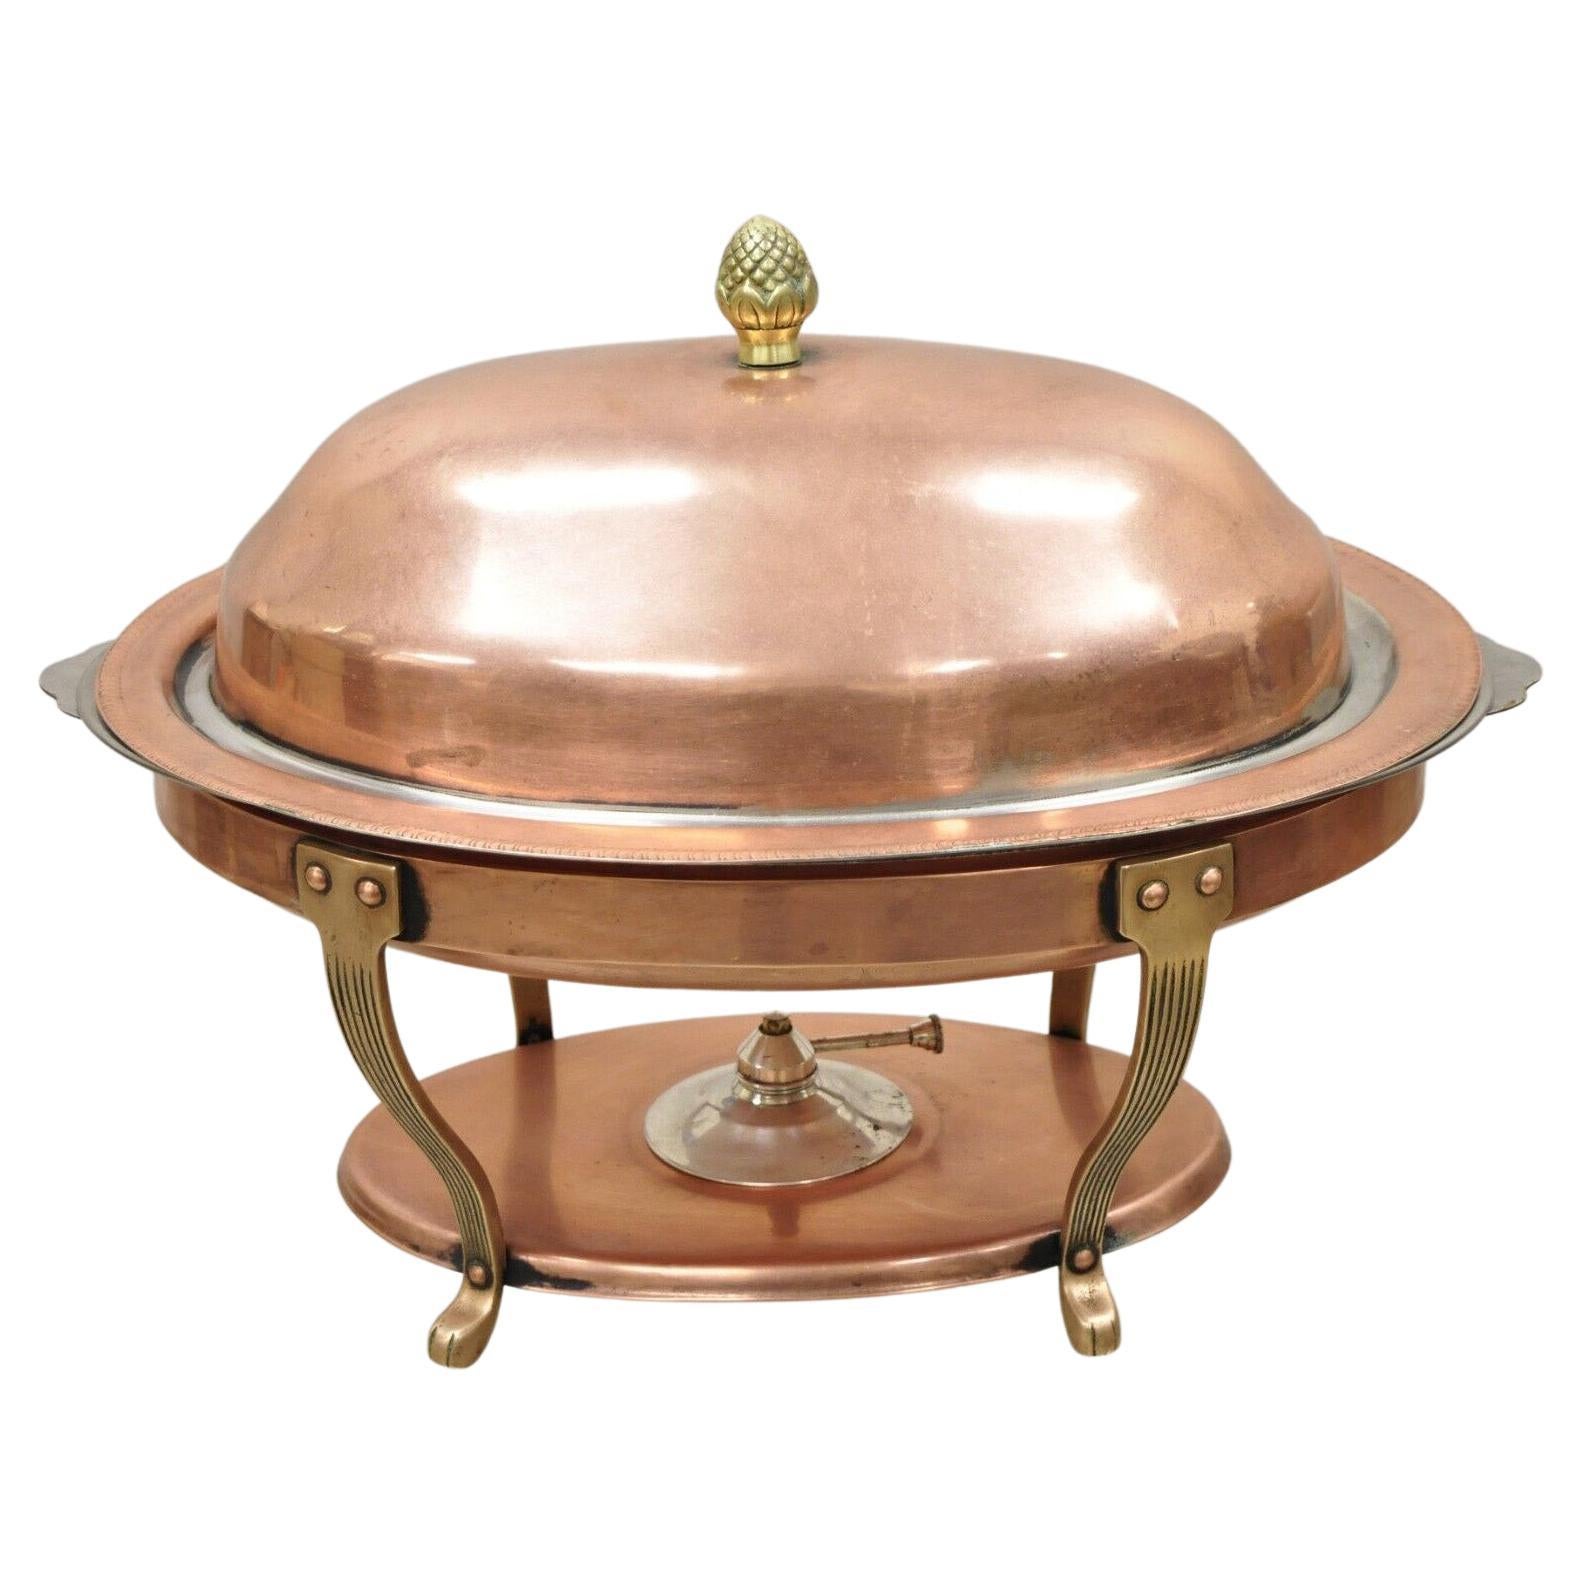 Vtg Legion Utensils Copper & Brass Oval Chafing Dish Warming Tray Serving Pan